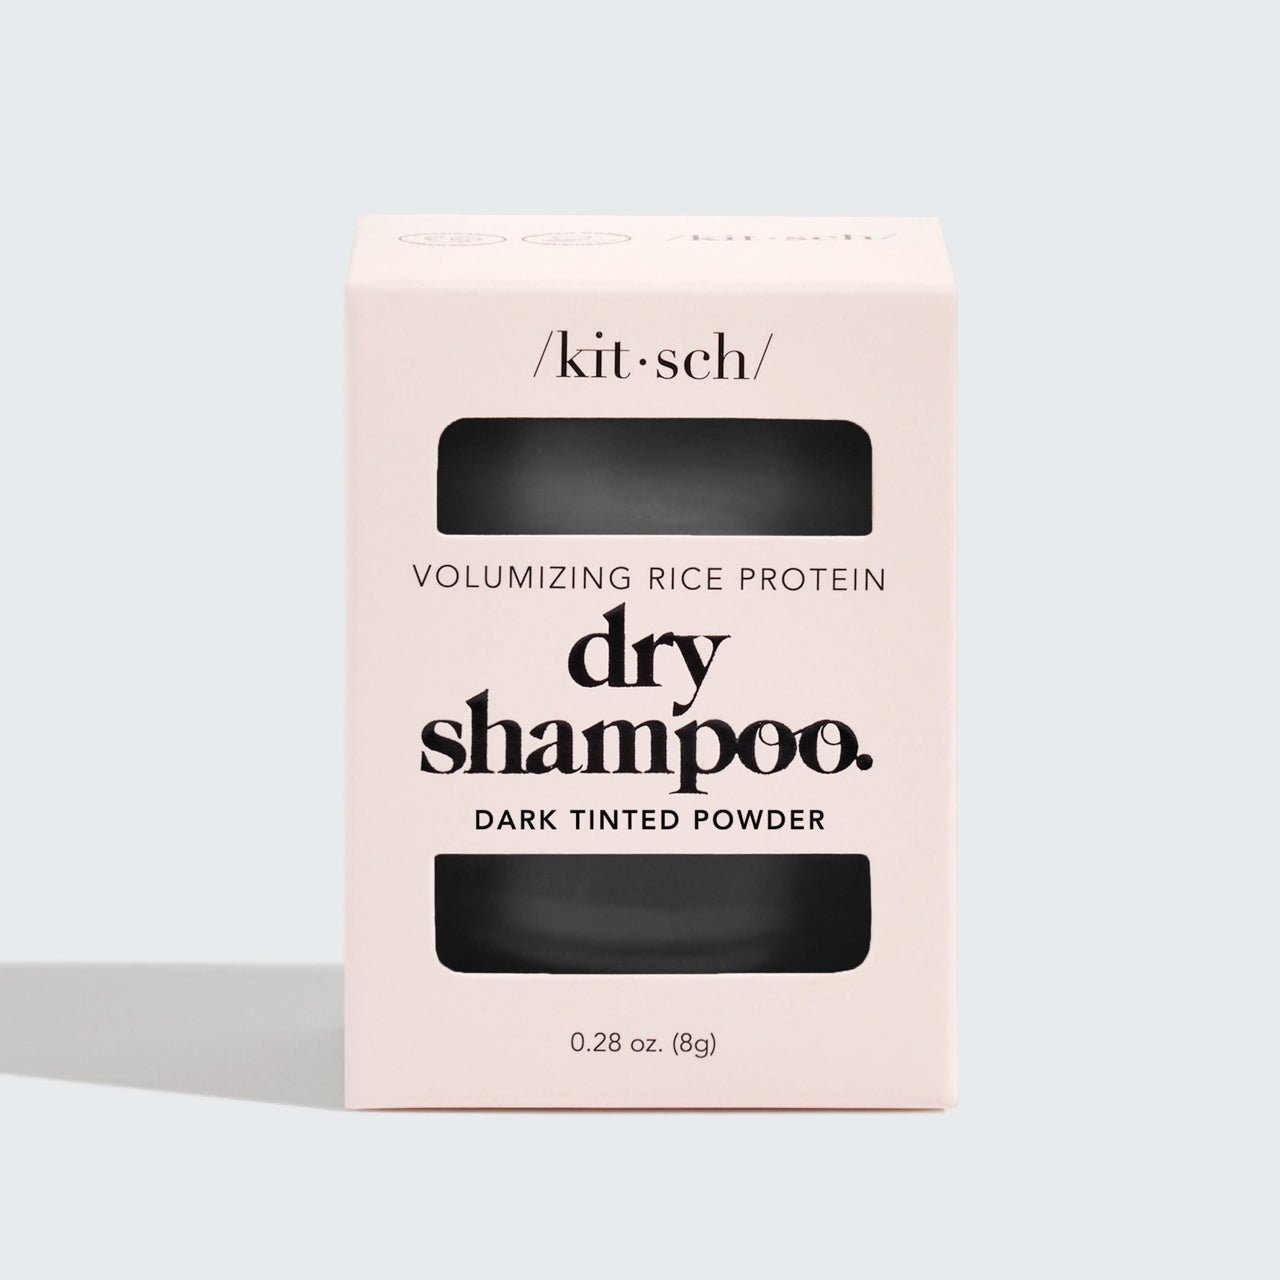 Volumizing Rice Protein Dry Shampoo - For Dark Hair